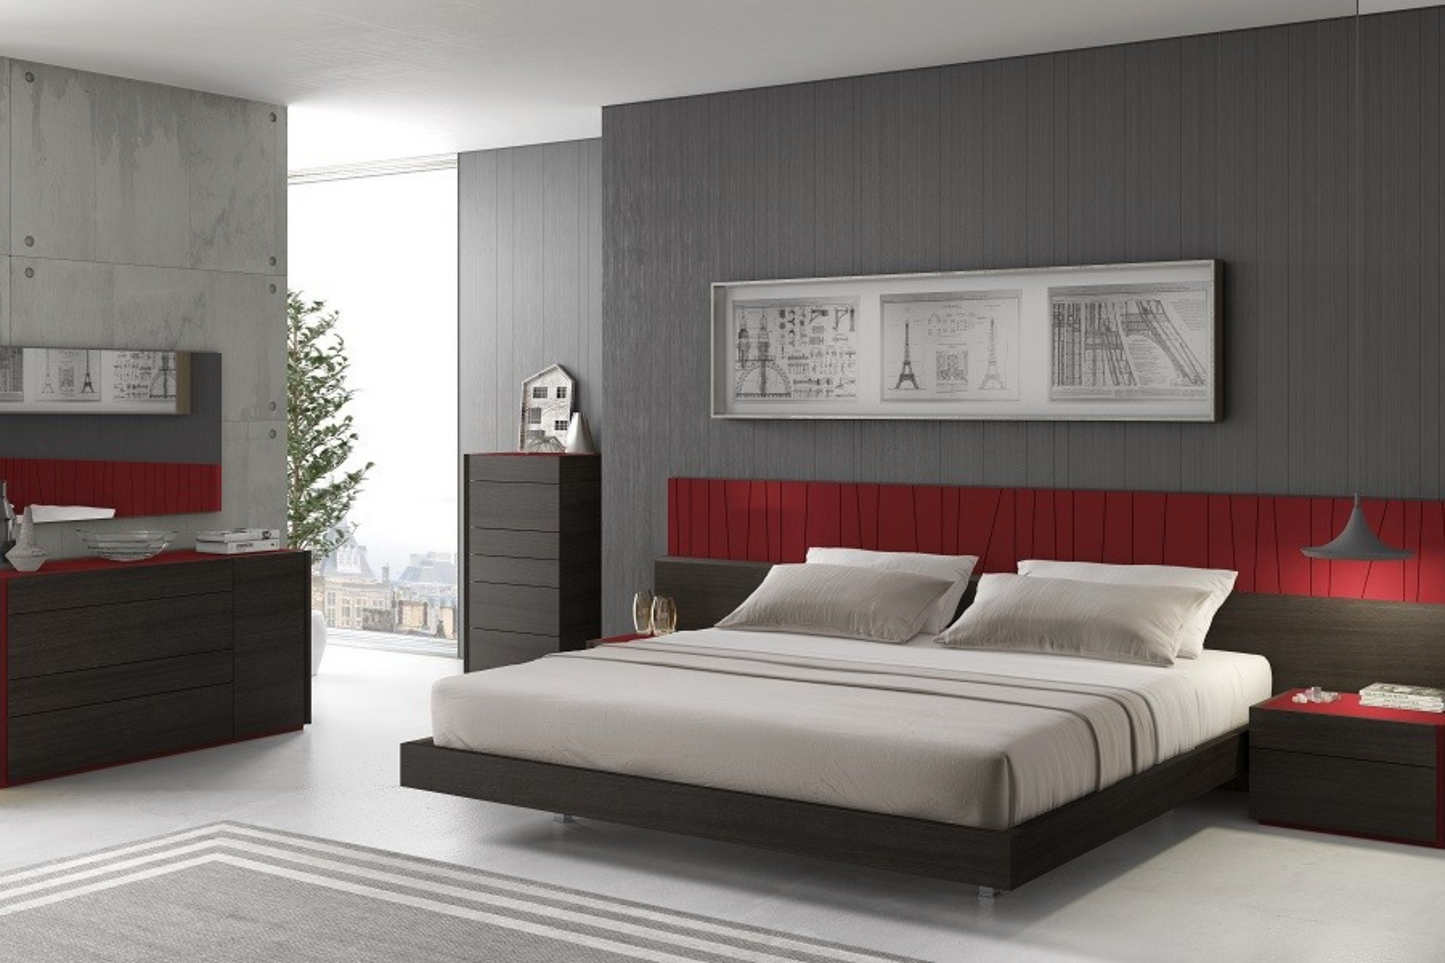 Lagos Premium Bedroom Bed SKU: 17867250